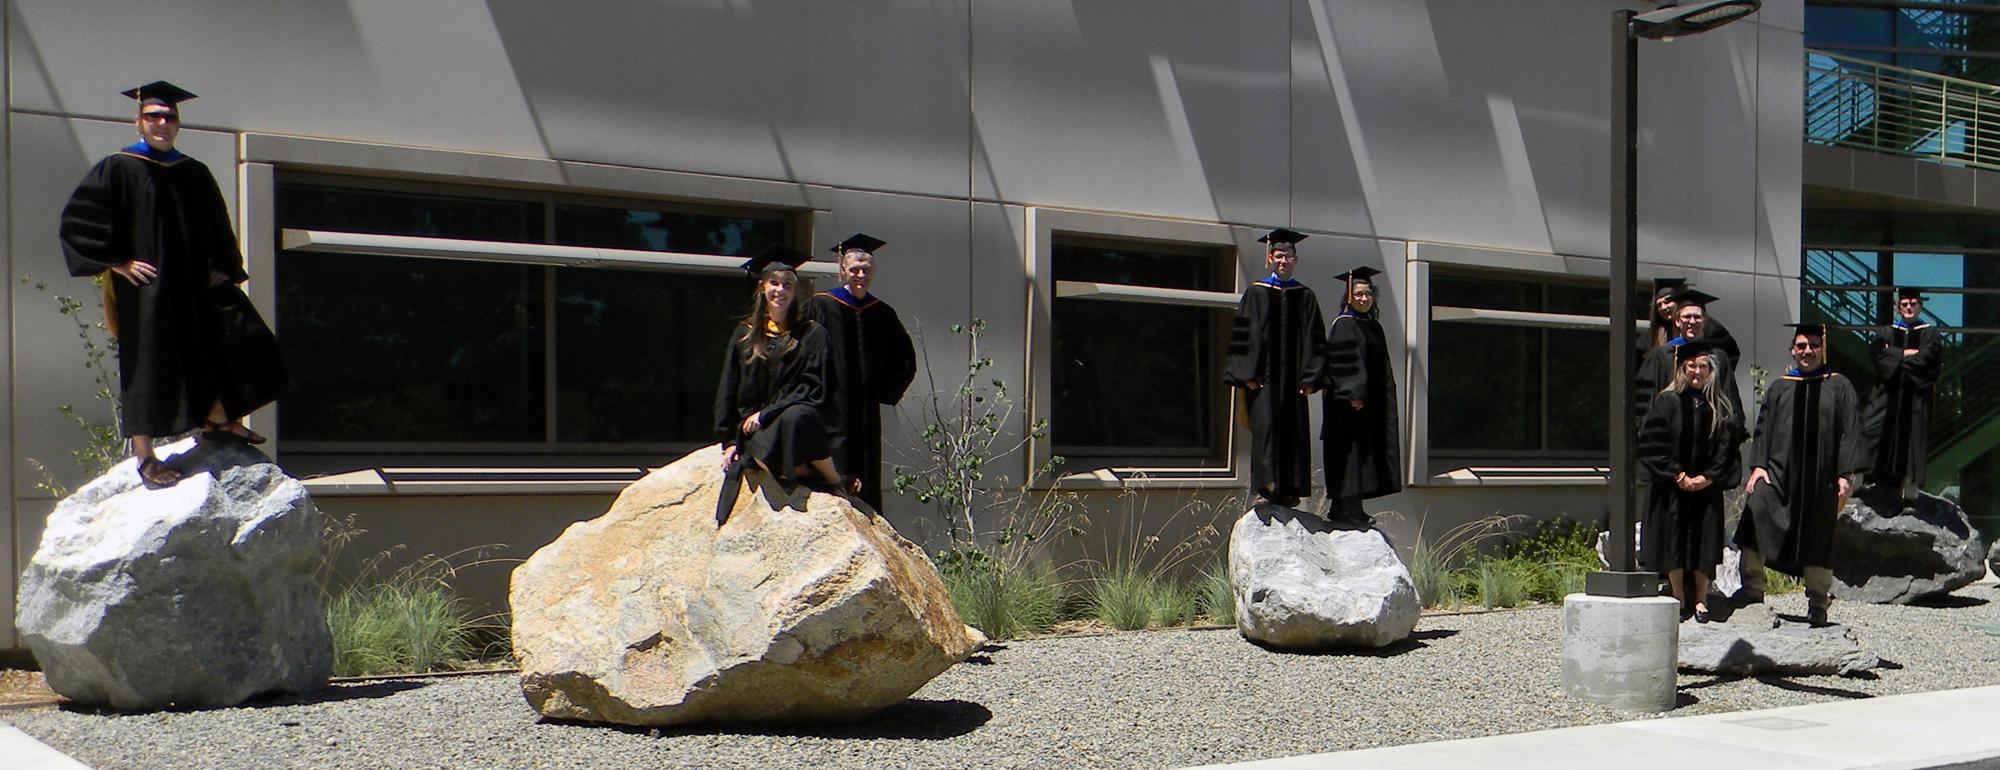 Grad students standing on rocks